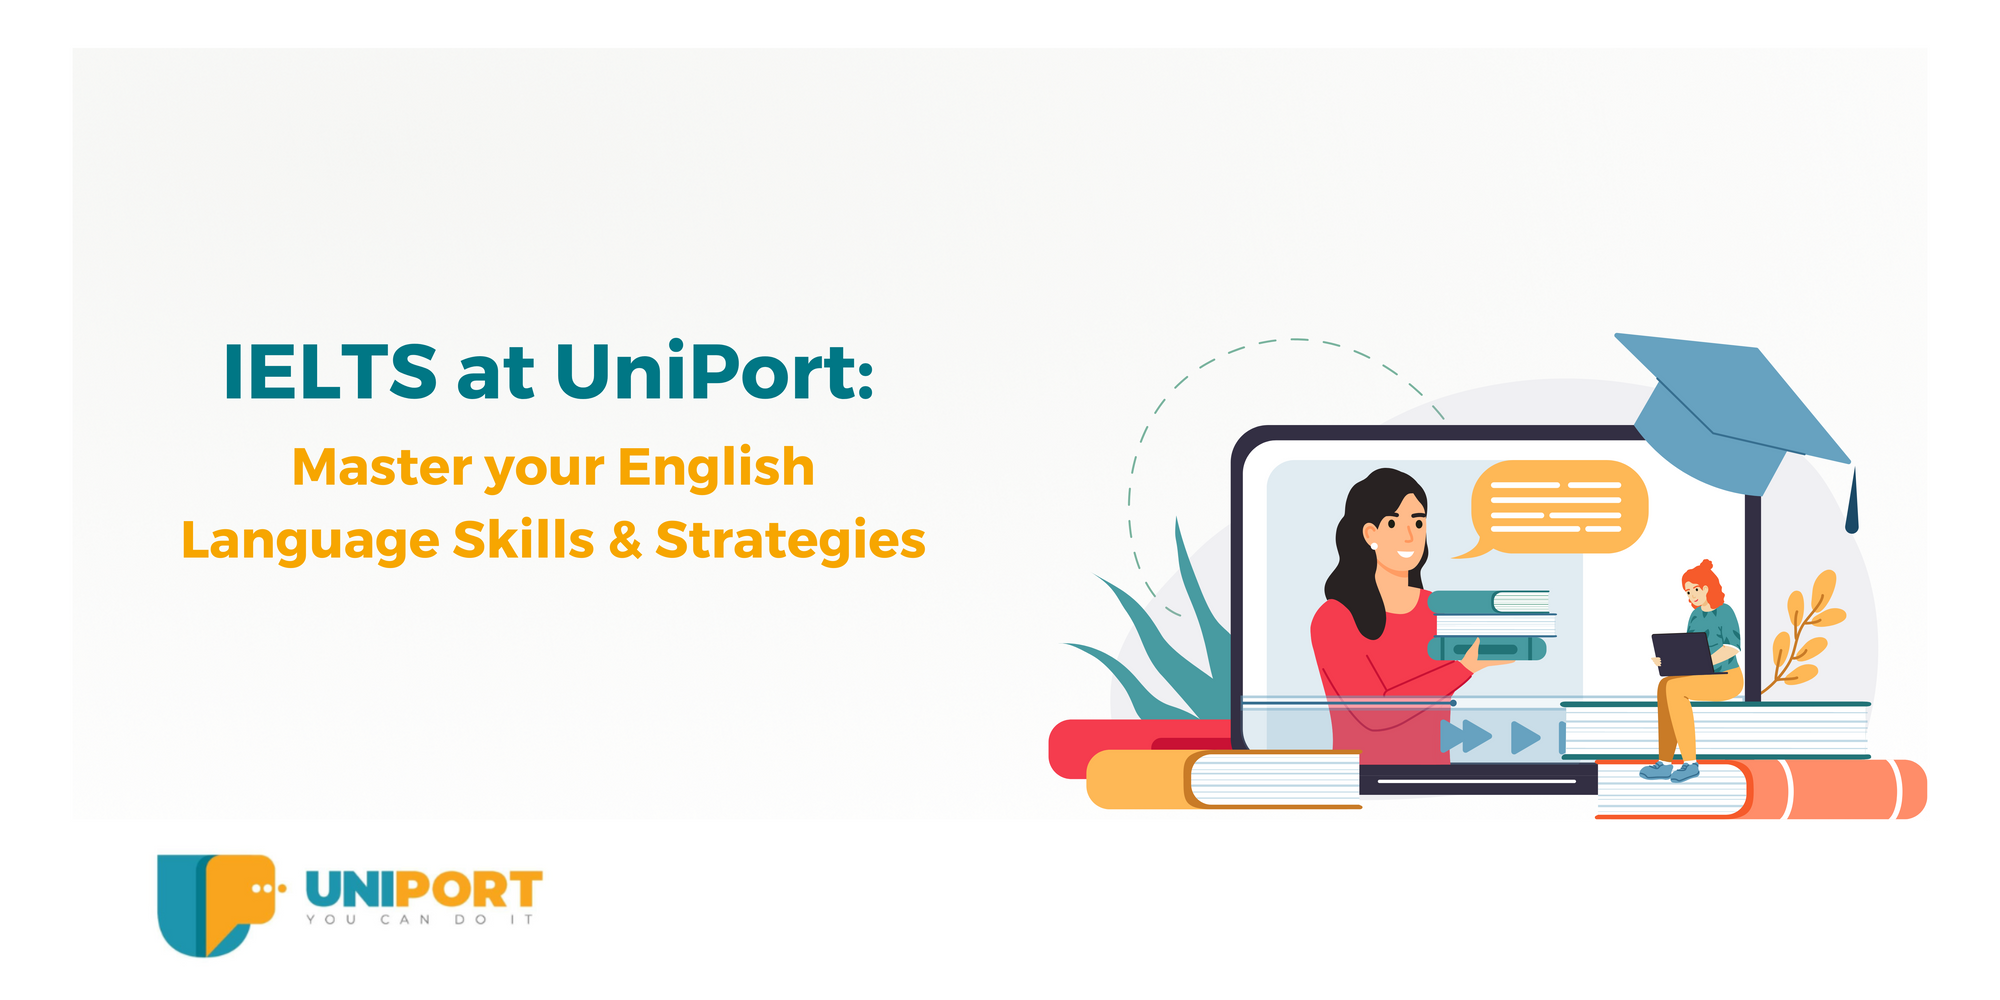 IELTS at UniPort: Master your English Language Skills & Strategies